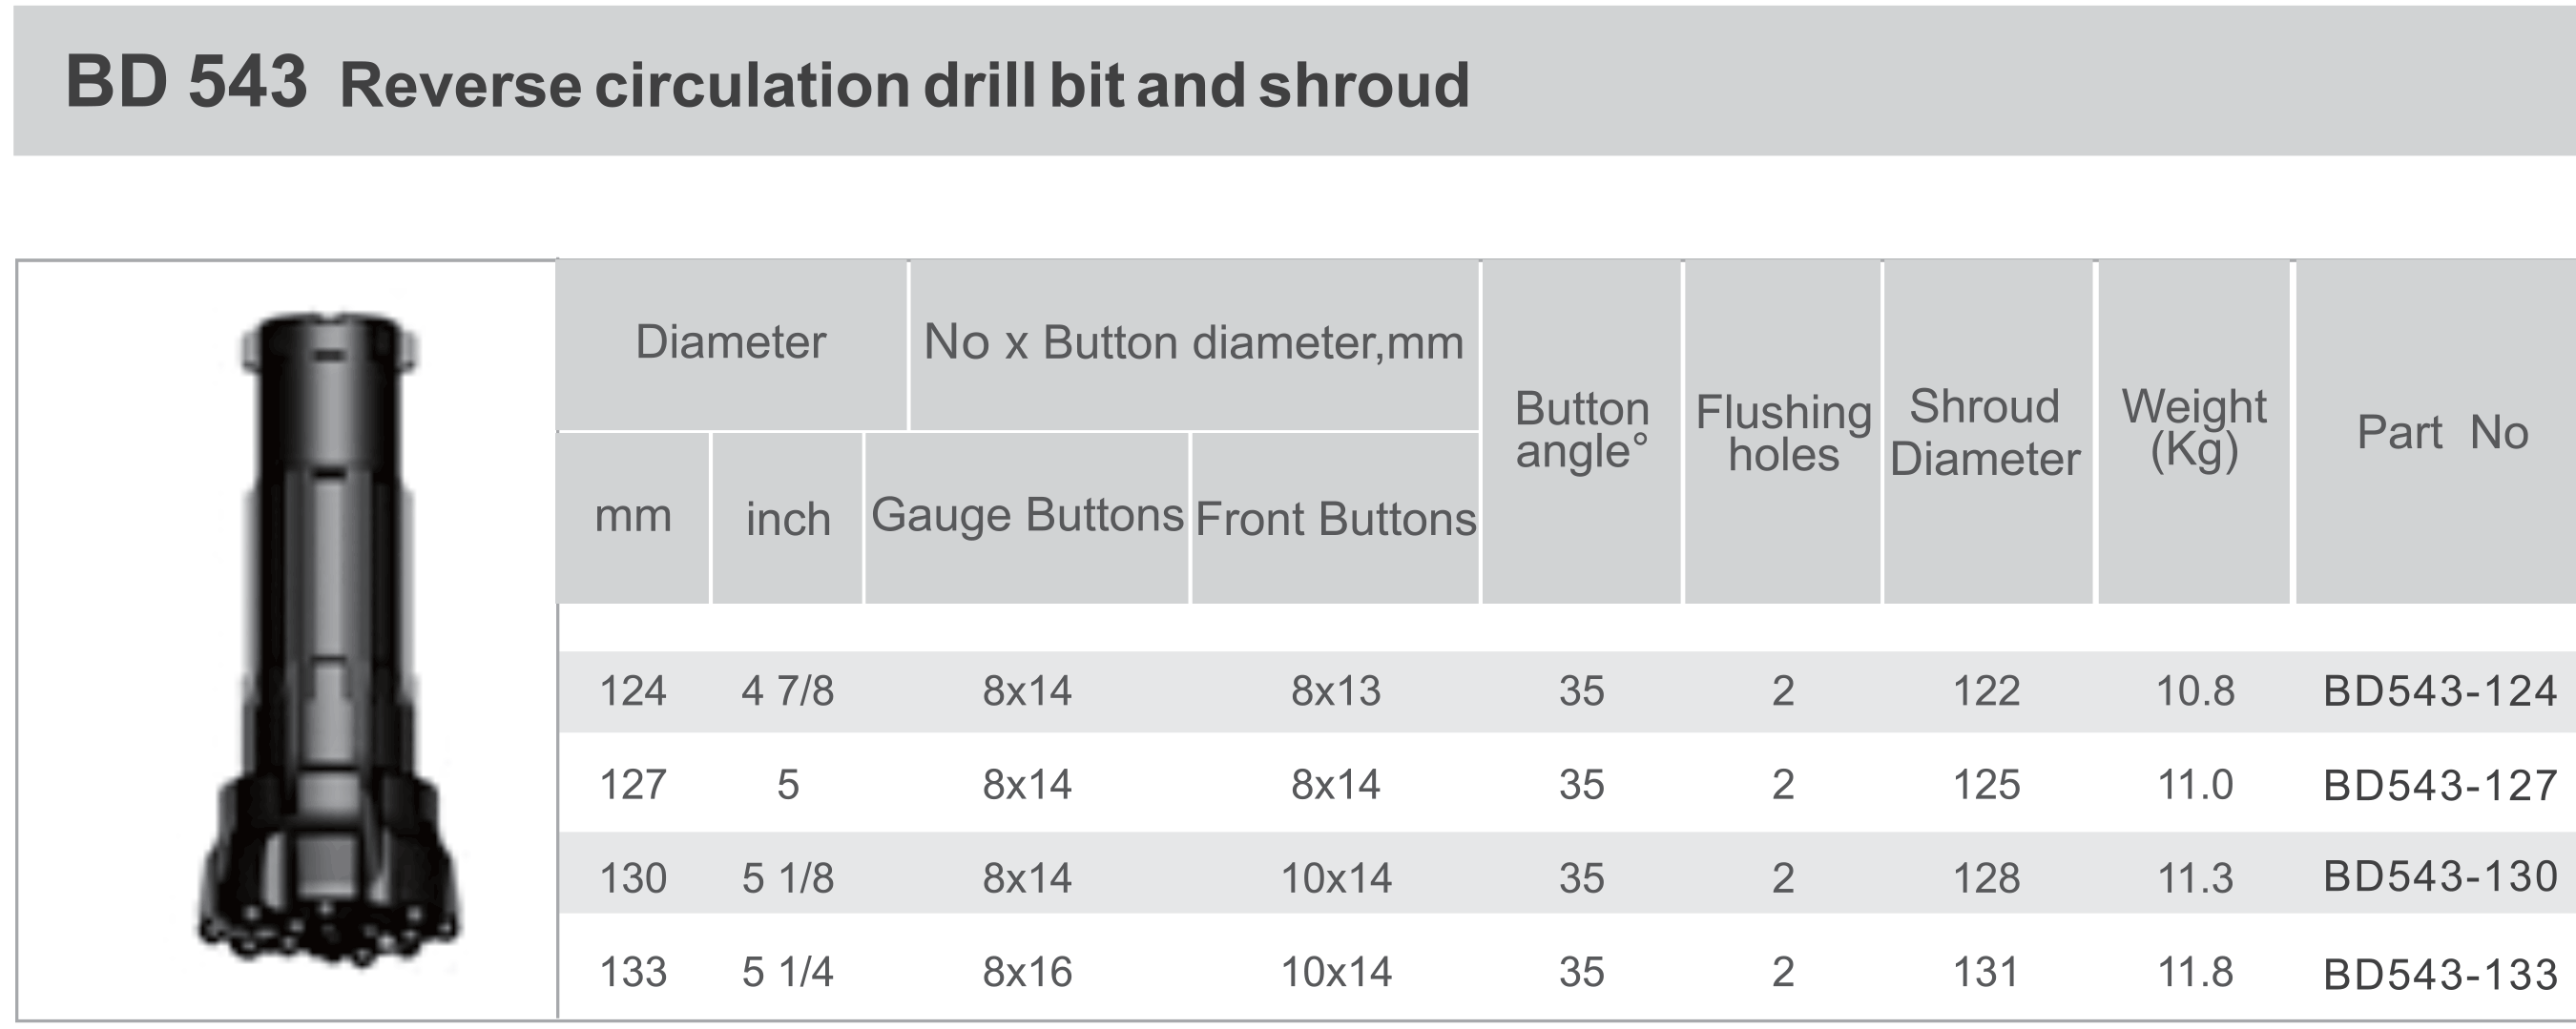 Black Diamond Drilling BD543 RC Reverse Circulation Drill Bit Shroud technical data